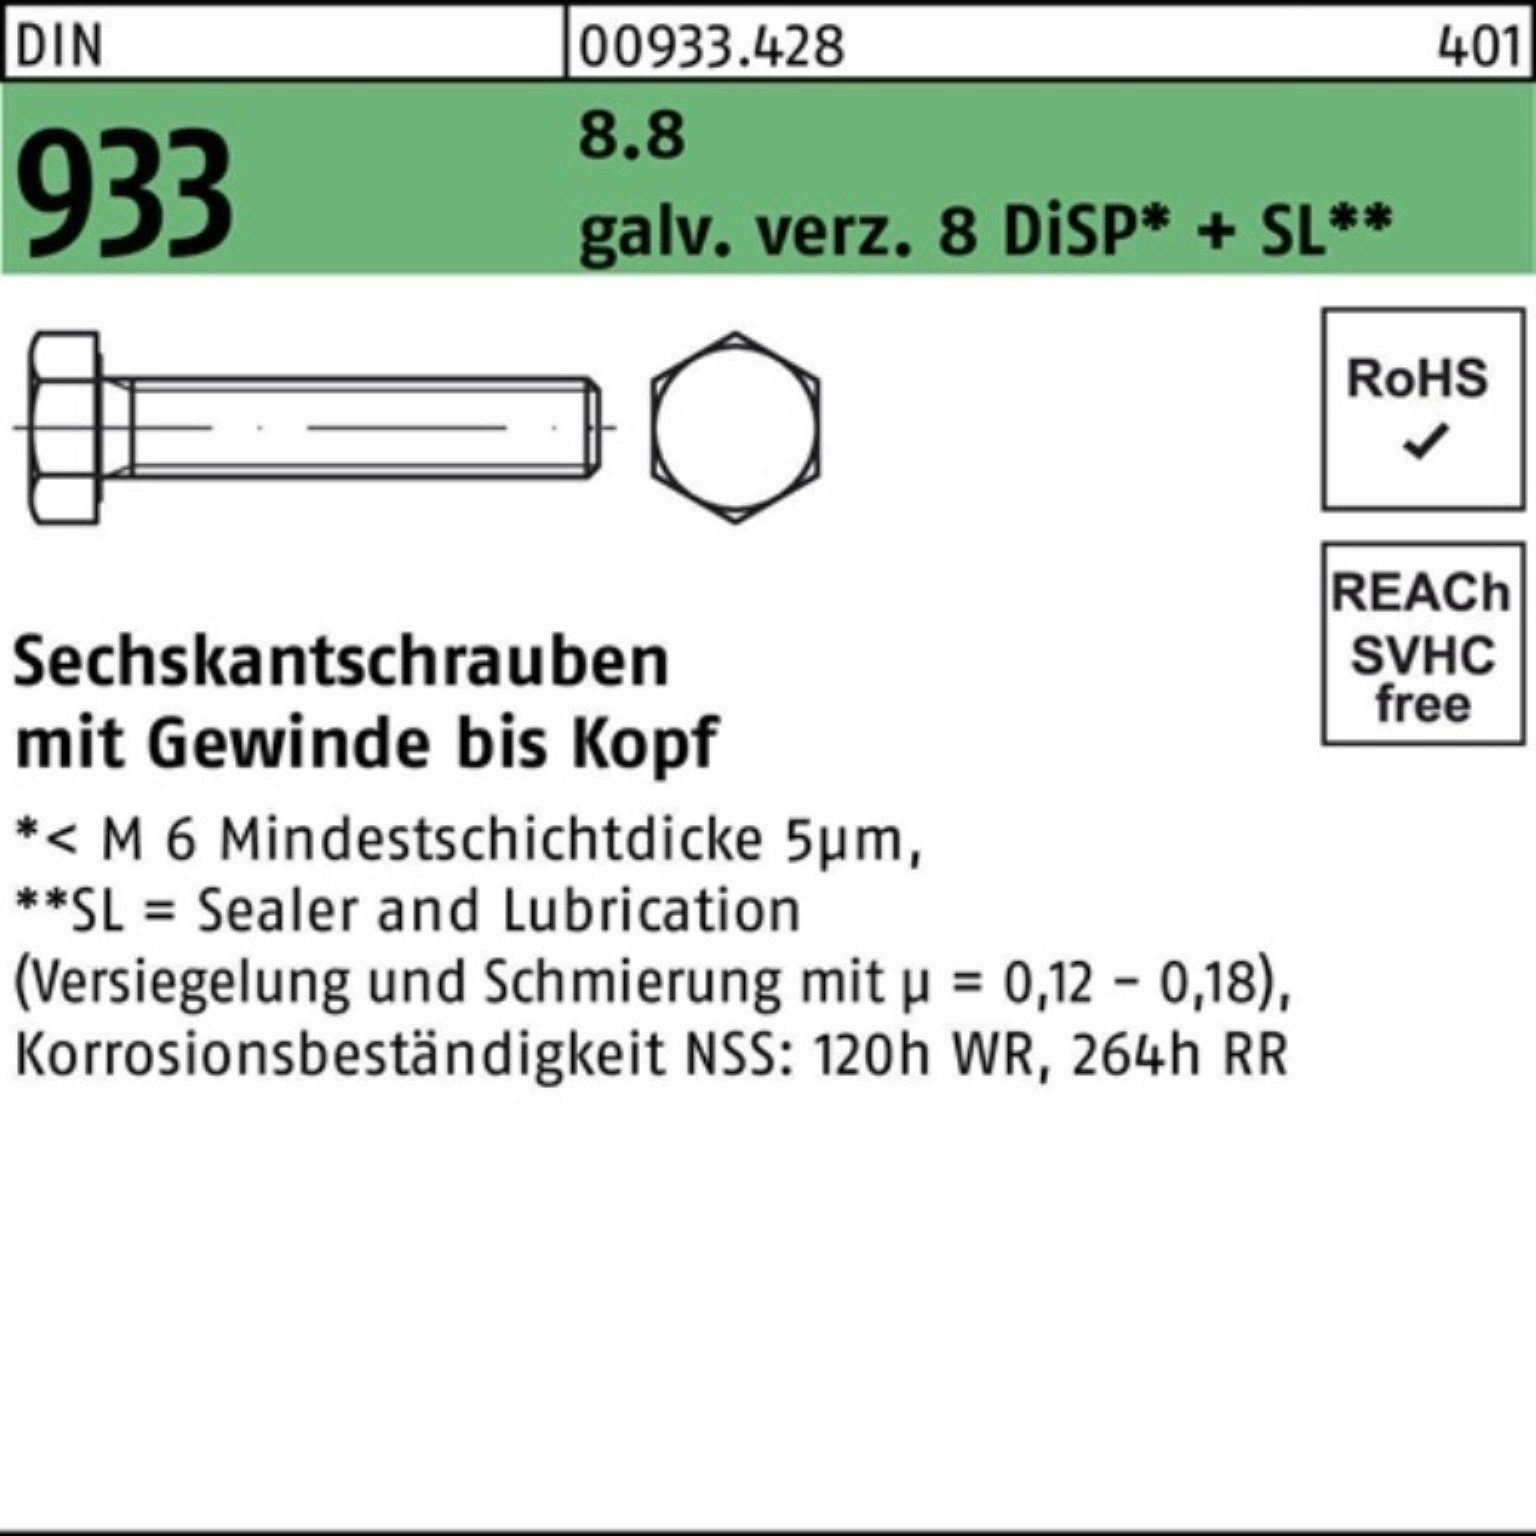 Reyher Sechskantschraube 100er Pack Sechskantschraube DIN S 933 VG DiSP Zn + 180 8.8 8 M16x gal